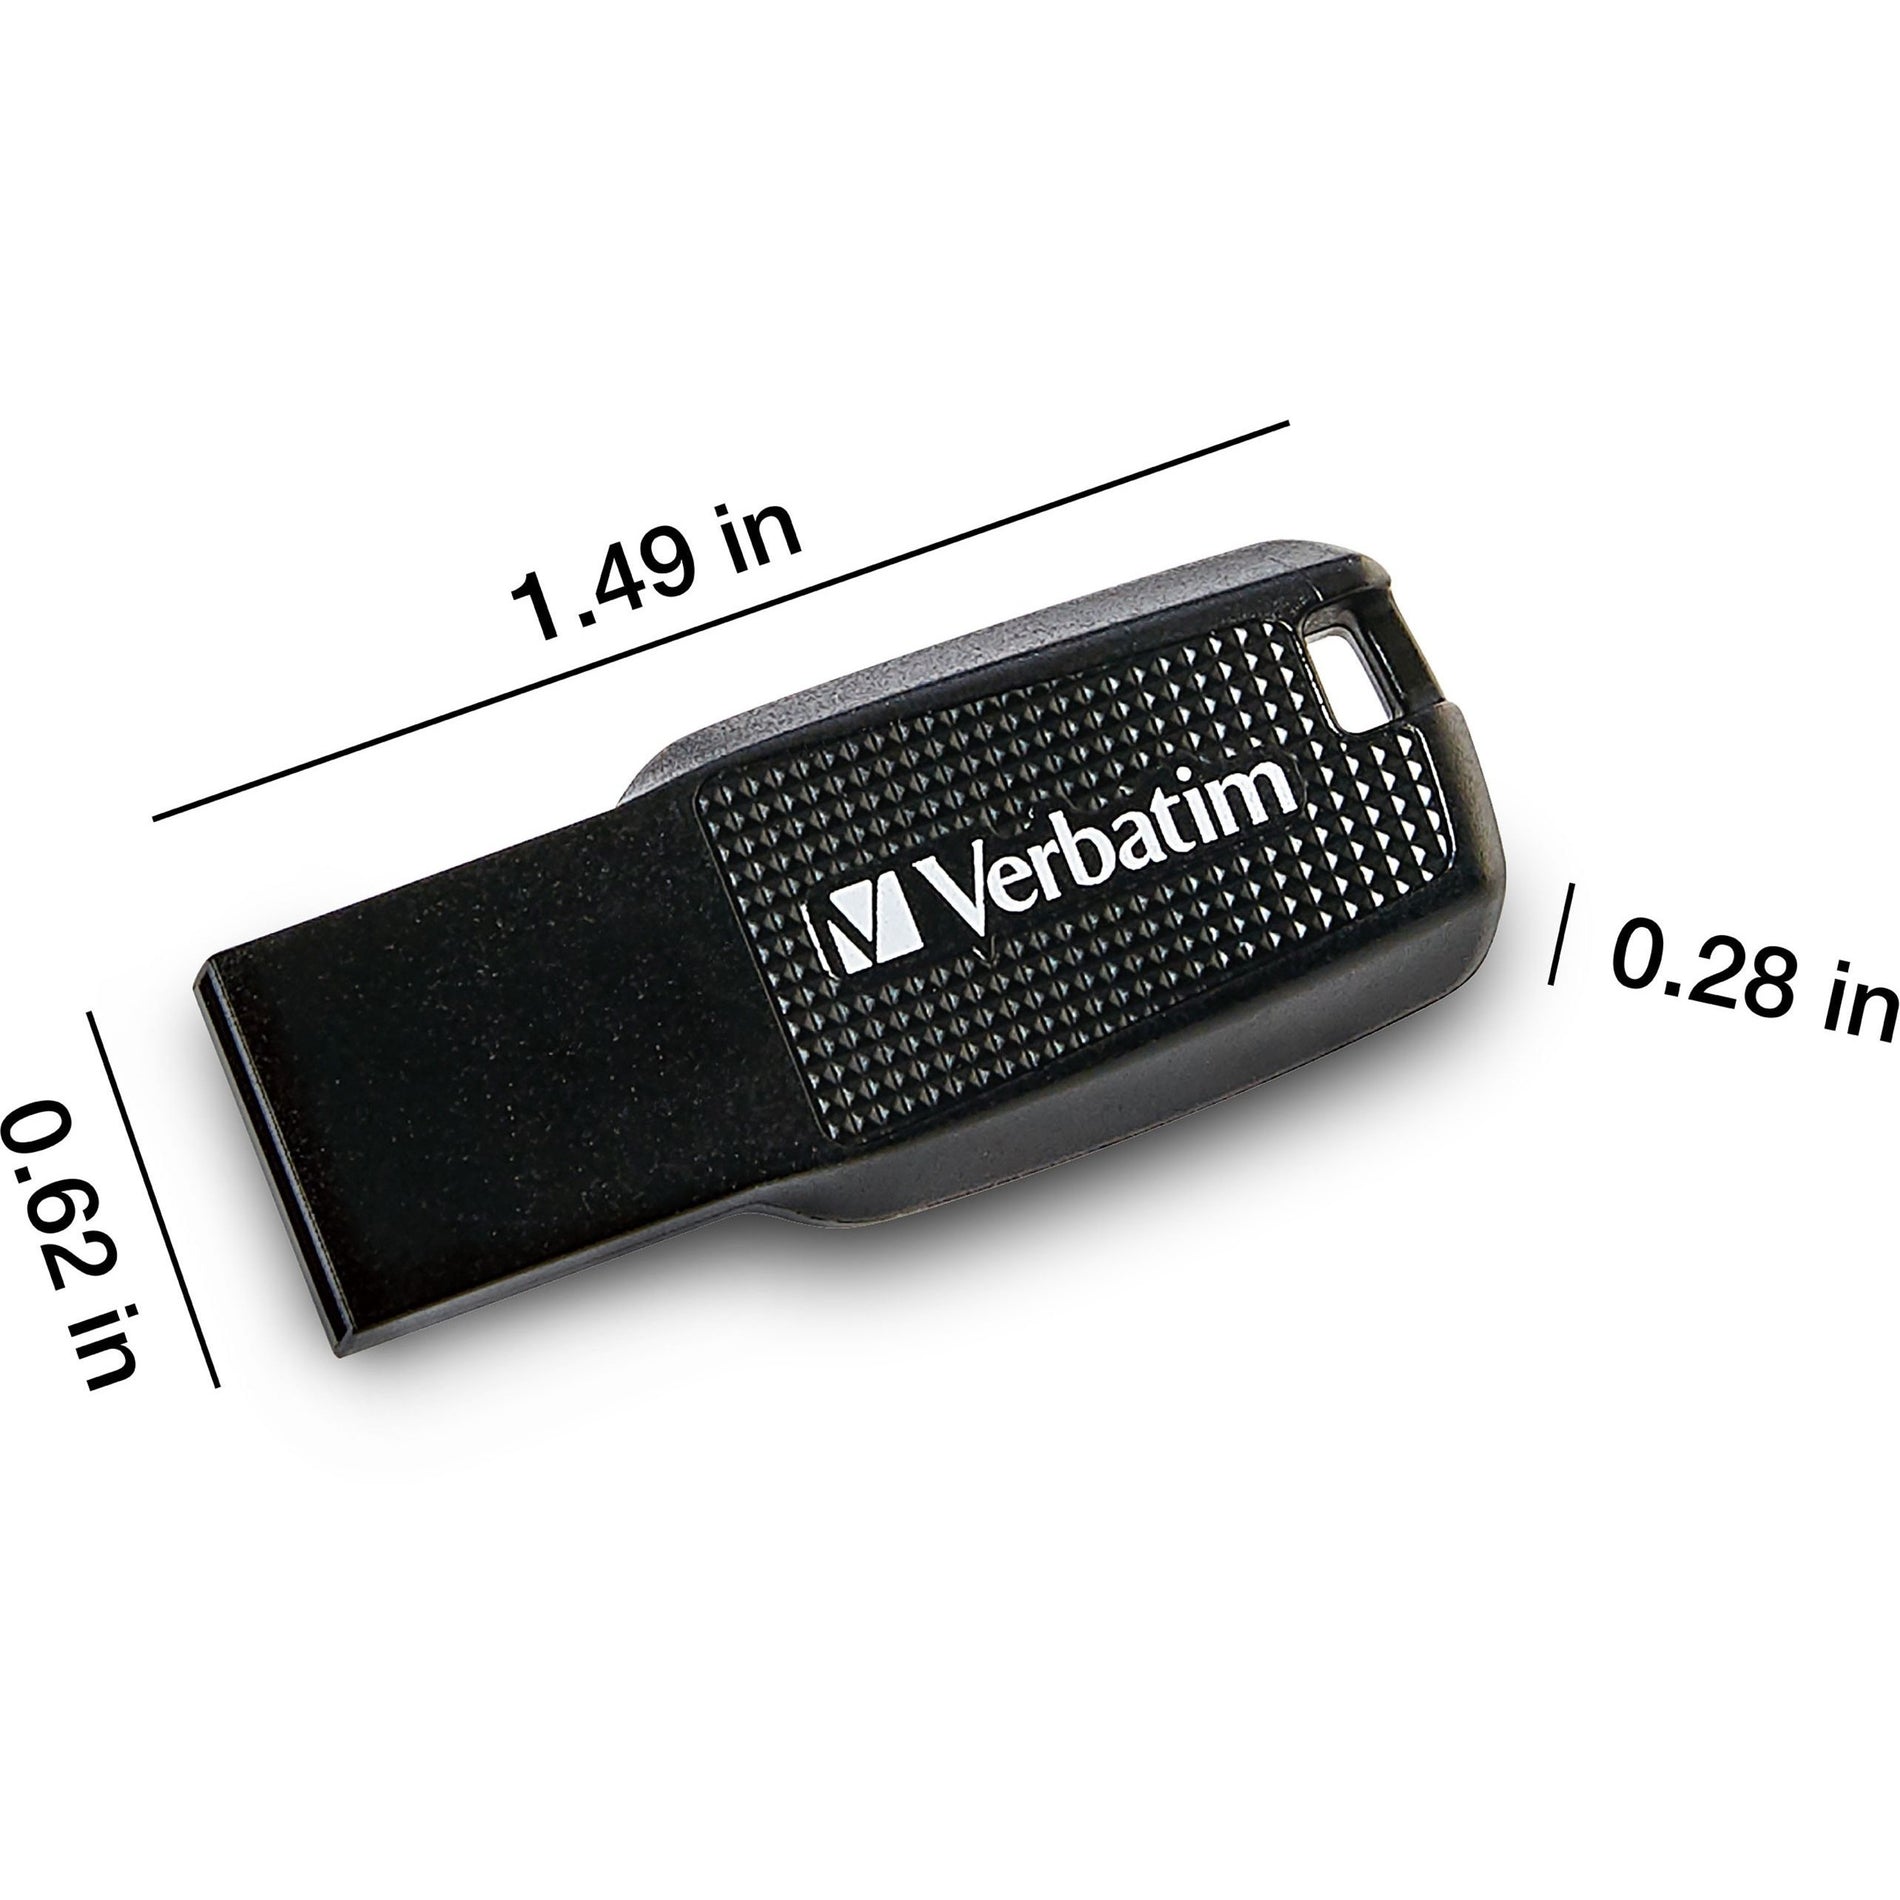 Verbatim 70877 64GB Ergo USB Flash Drive - Black, Capless, Password Protection